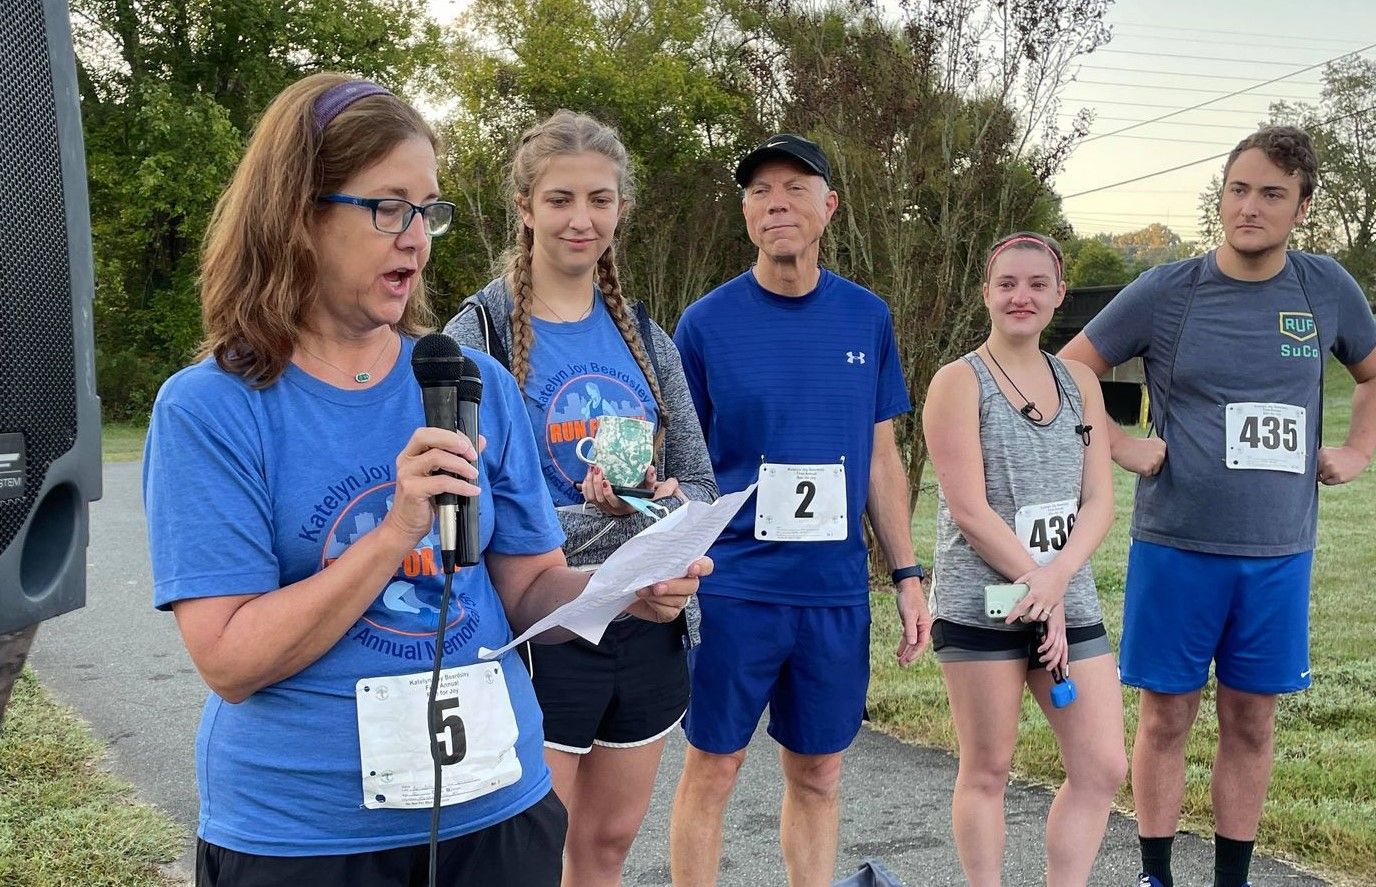 Run for Joy 5K offers some healing amid the hurt for Katelyn Beardsley's family